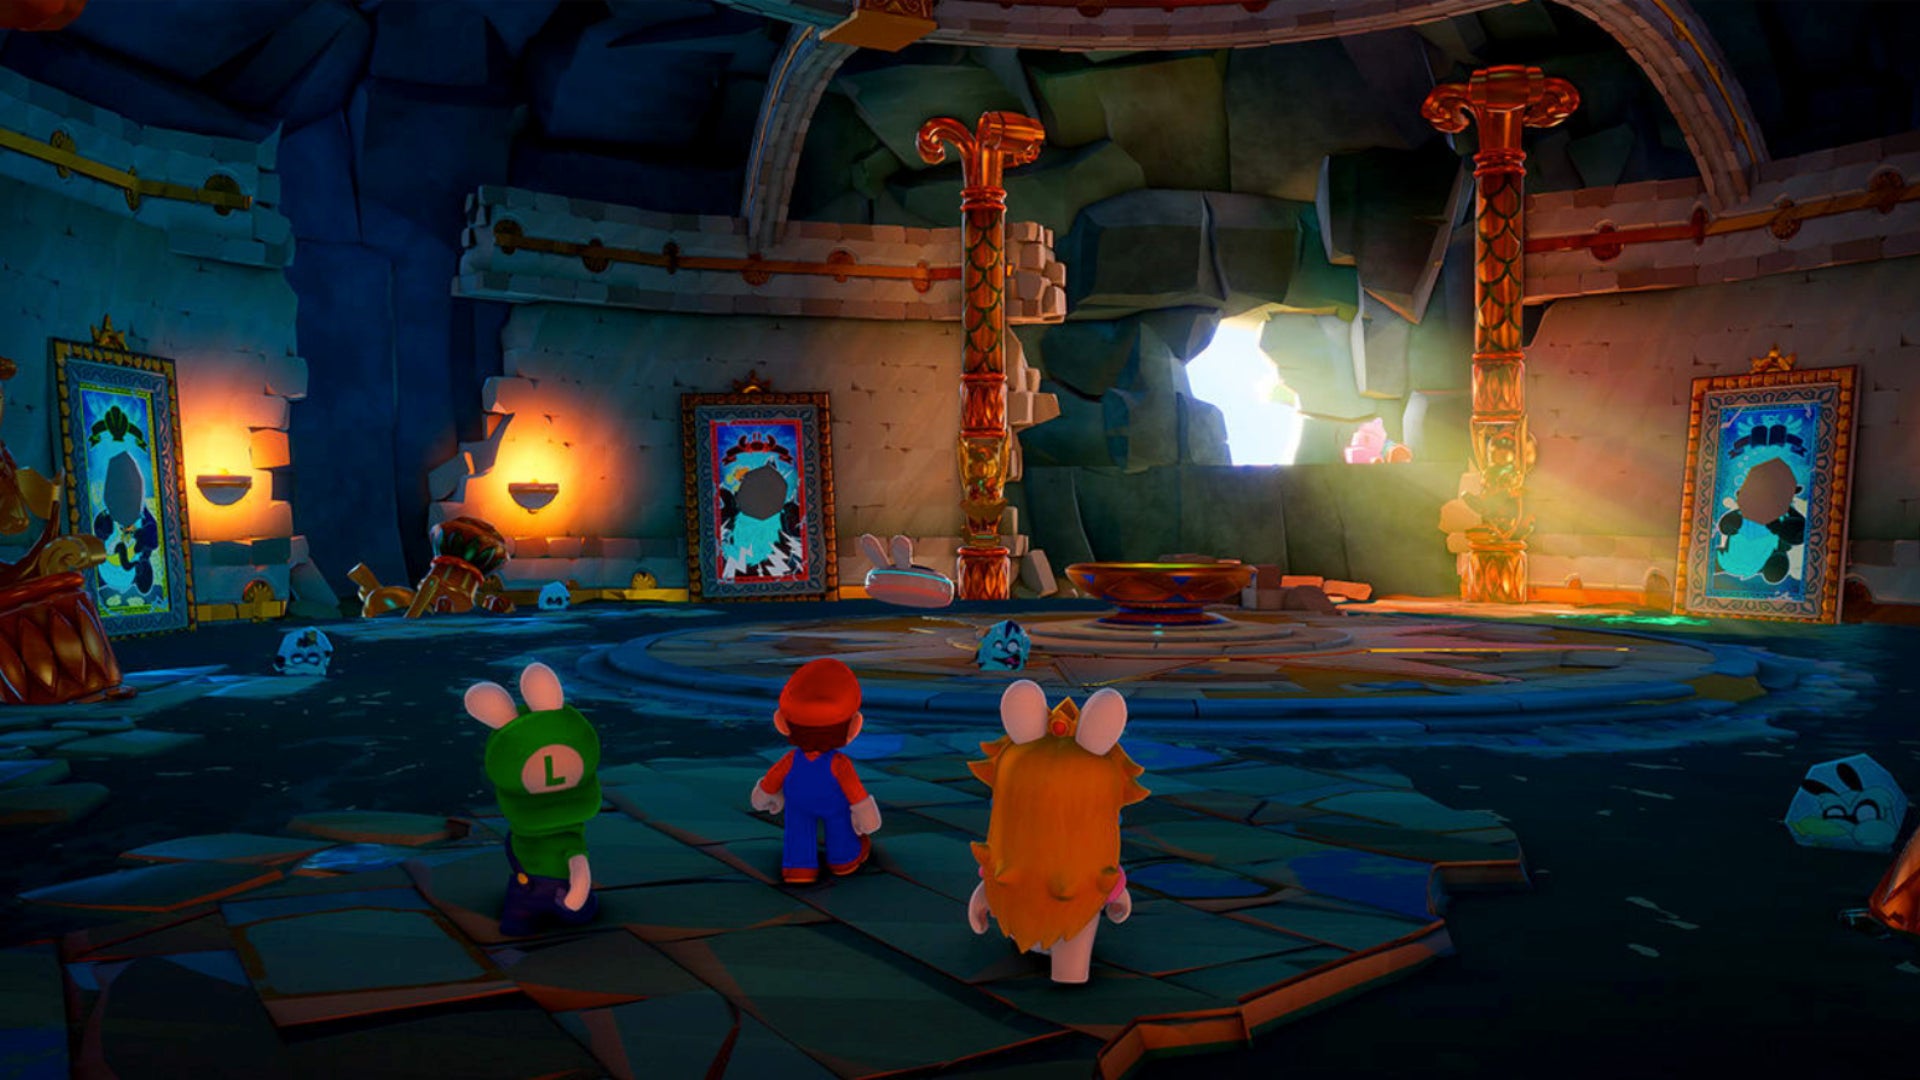 Mario, Rabbid Peach, and Rabbid Luigi all enter a ruined room in Mario + Rabbids Sparks of Hope.